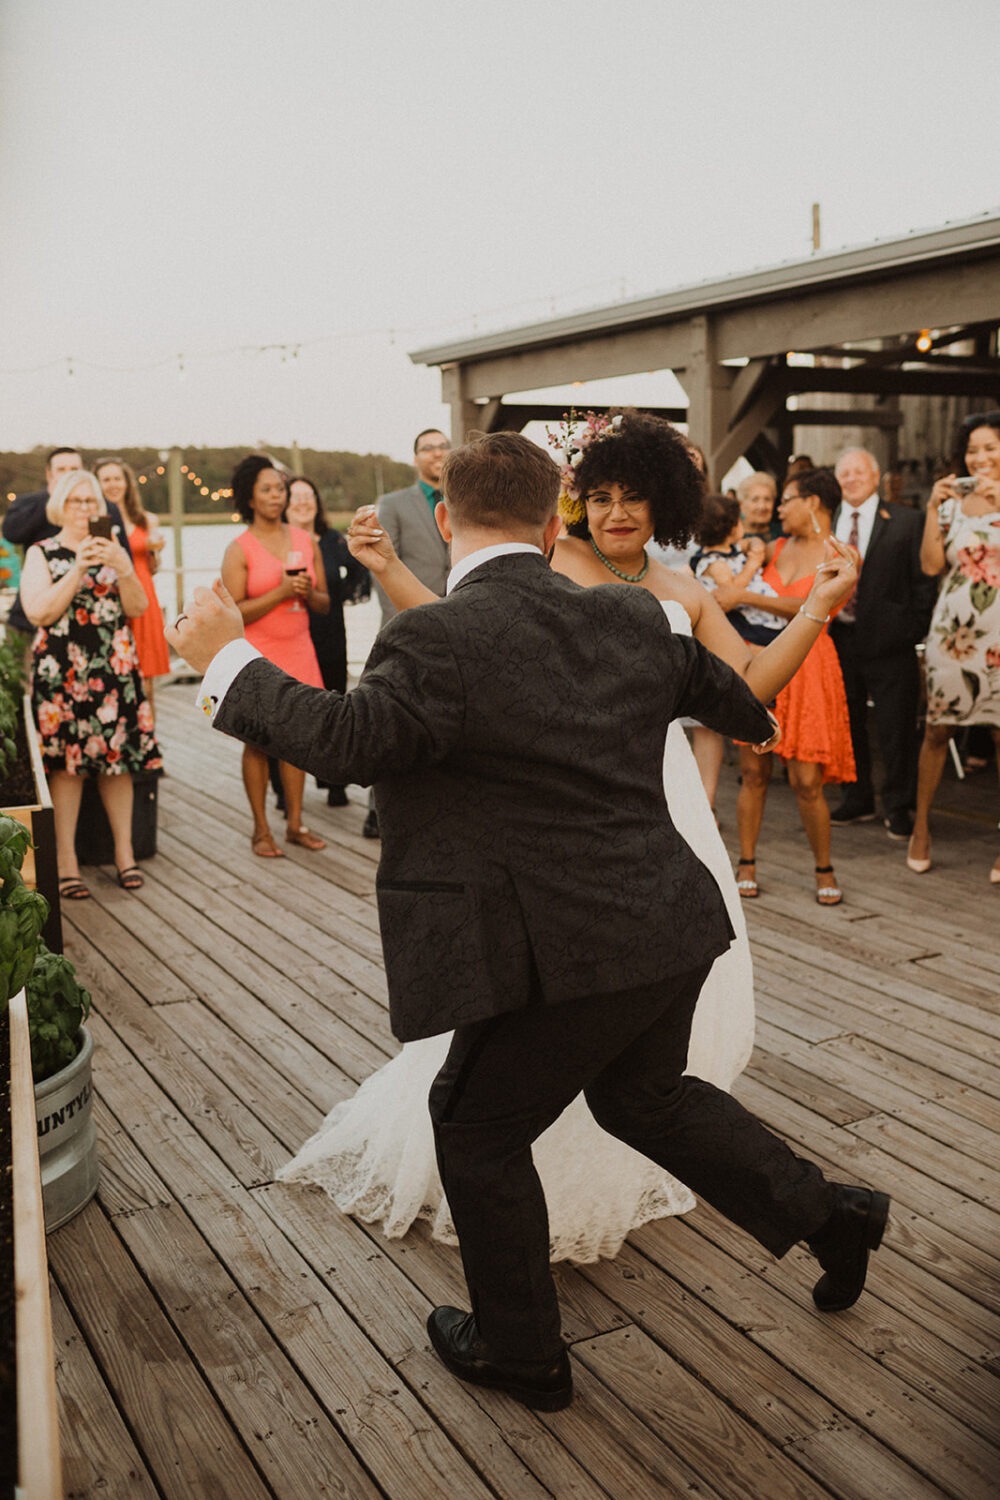 couple dances together at summer wedding reception